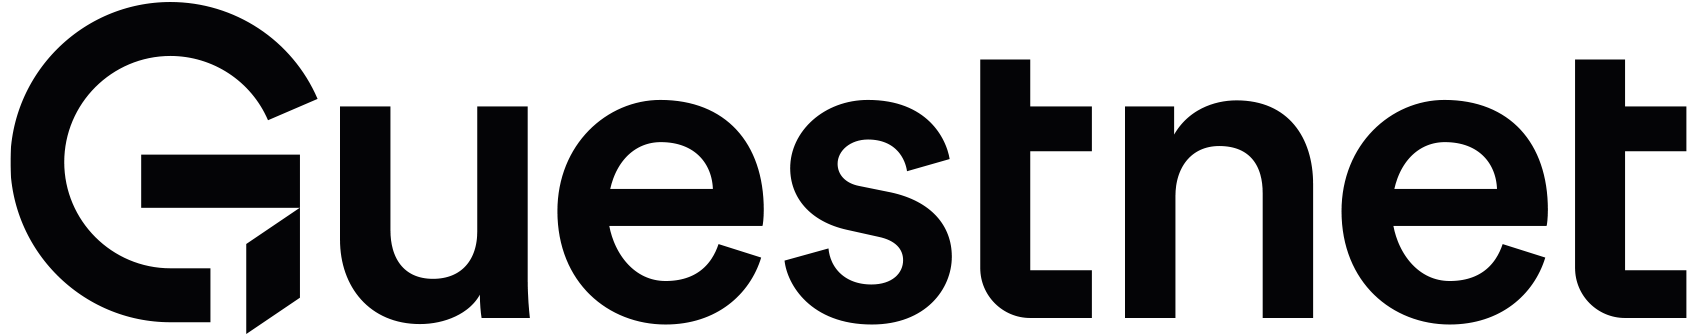 guestnet logo black